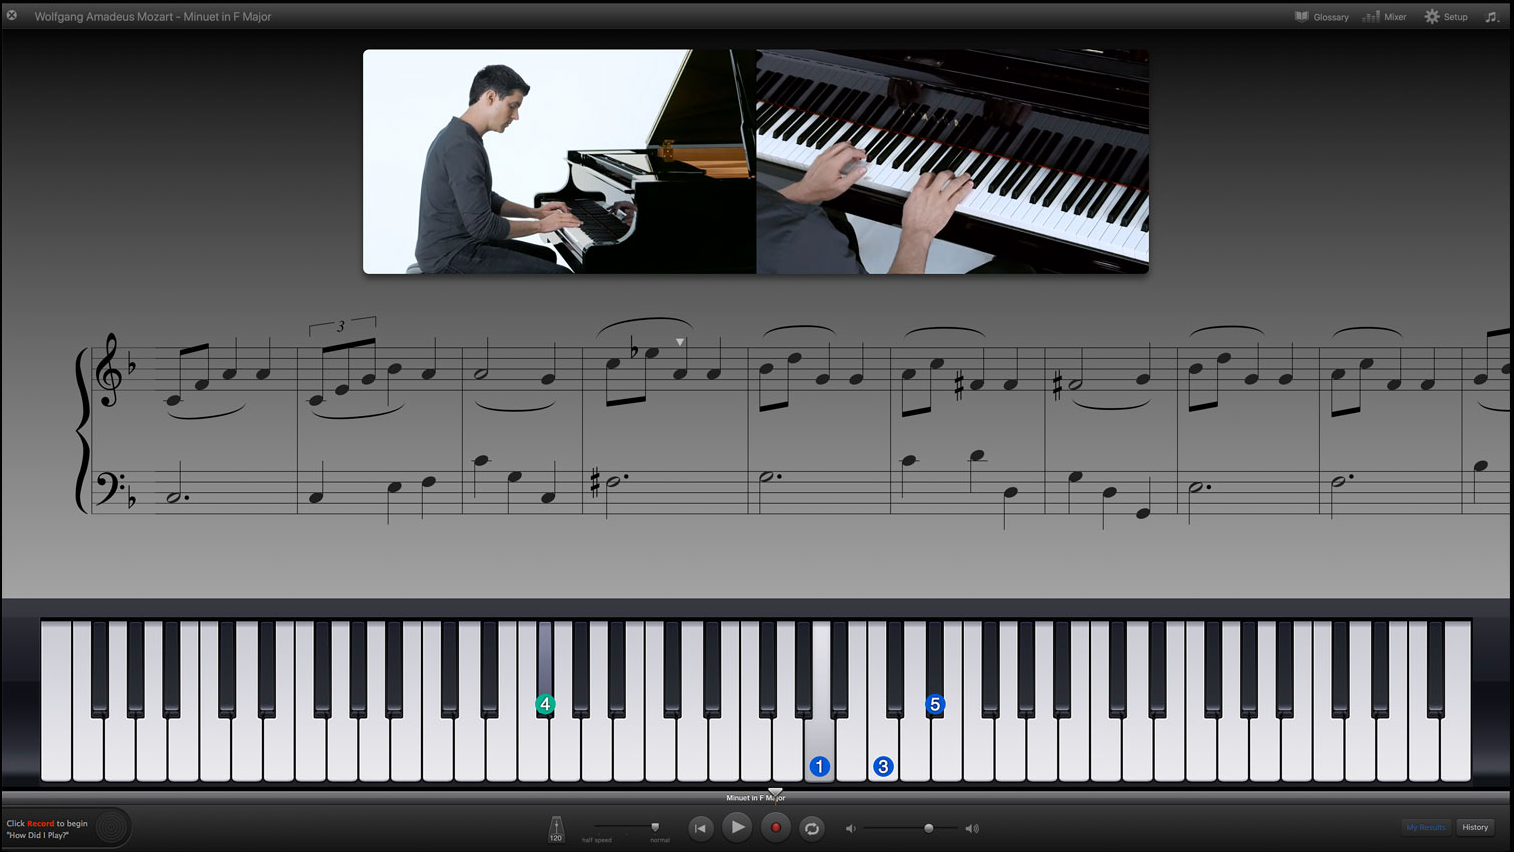 Screenshot of Garage Band software showing the piano tutorial feature